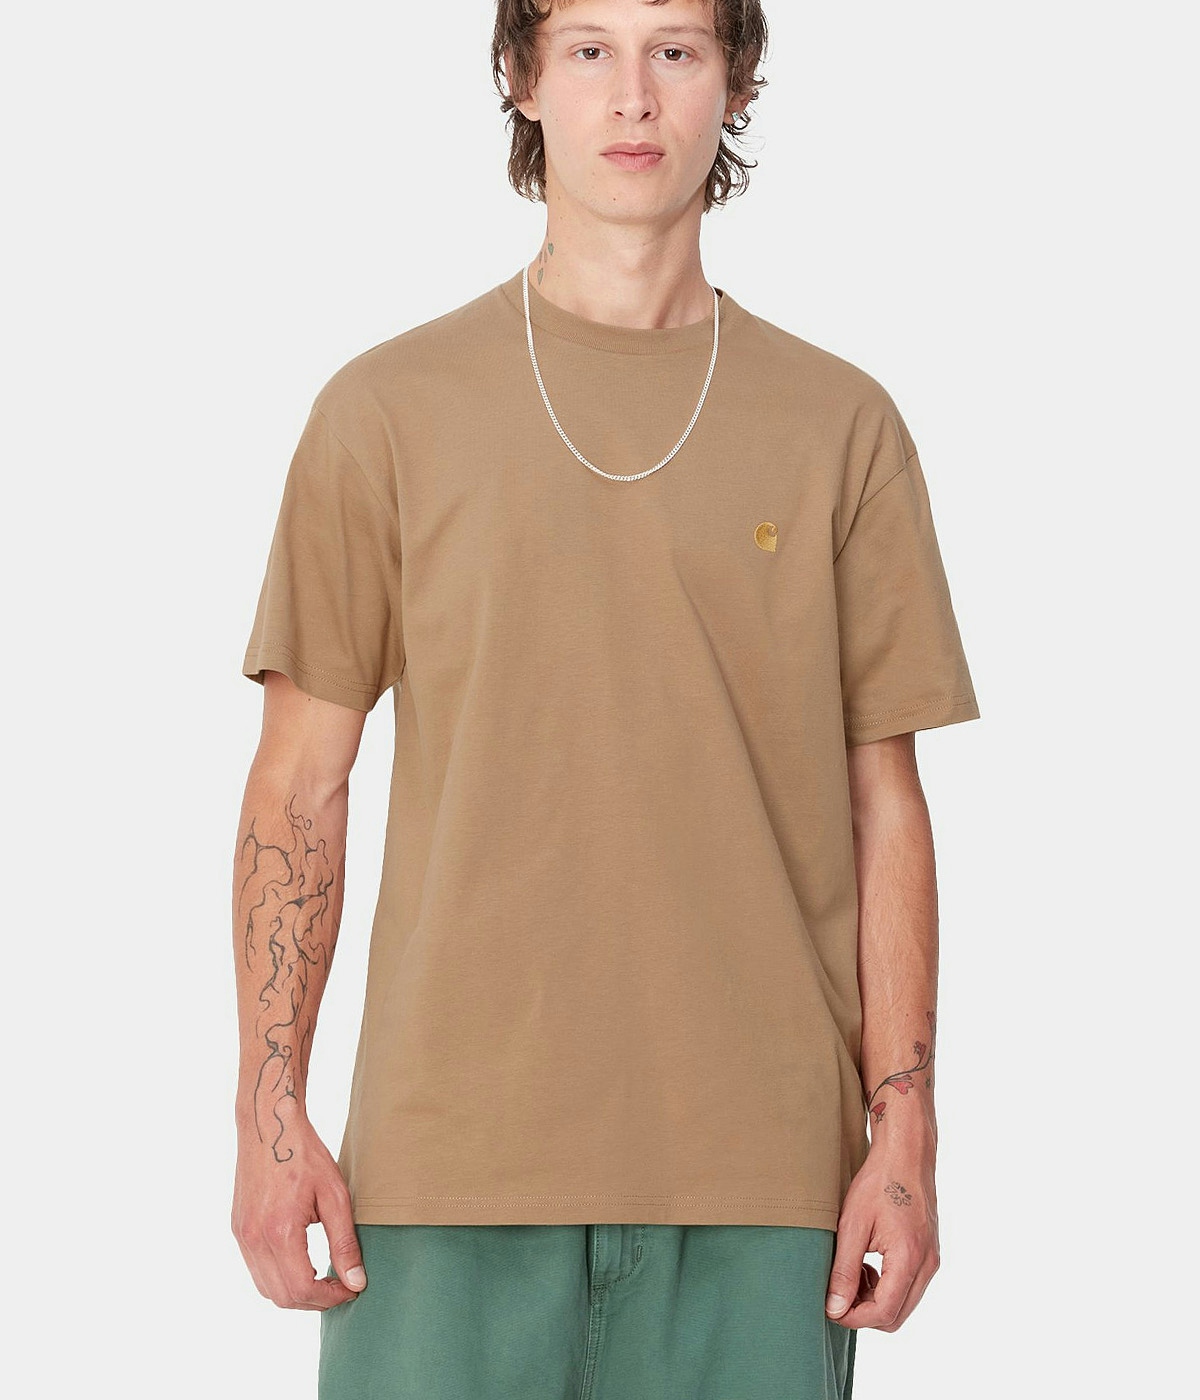 Carhartt T-shirt S/S Chase Peanut / Gold